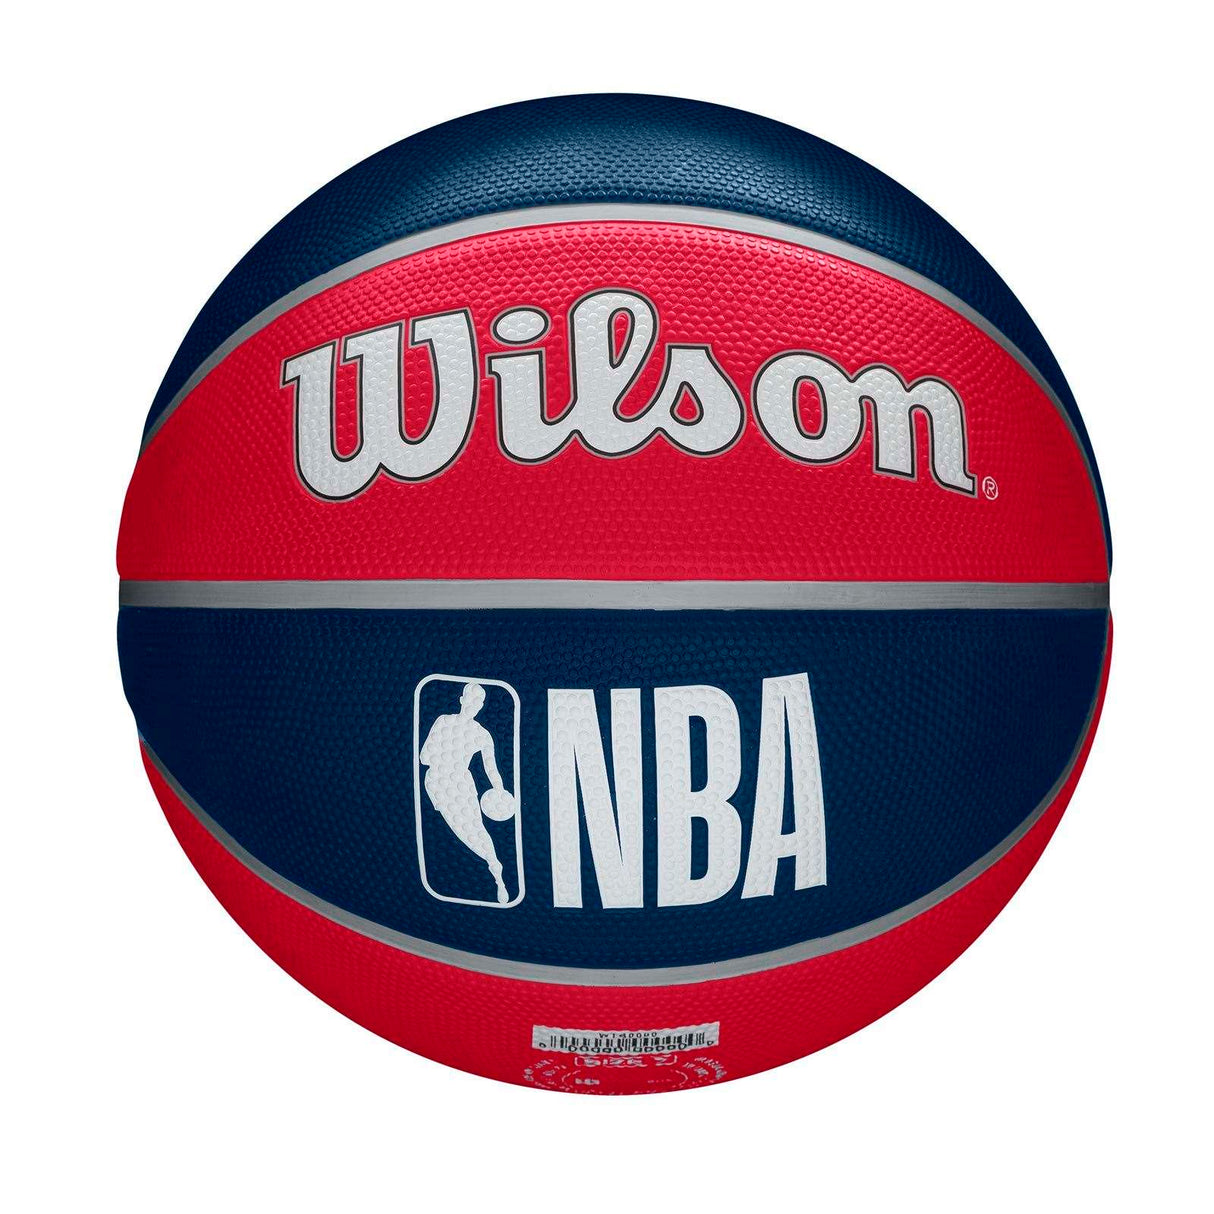 Wilson NBA Team Tribute Wizards Basketball - Size 7